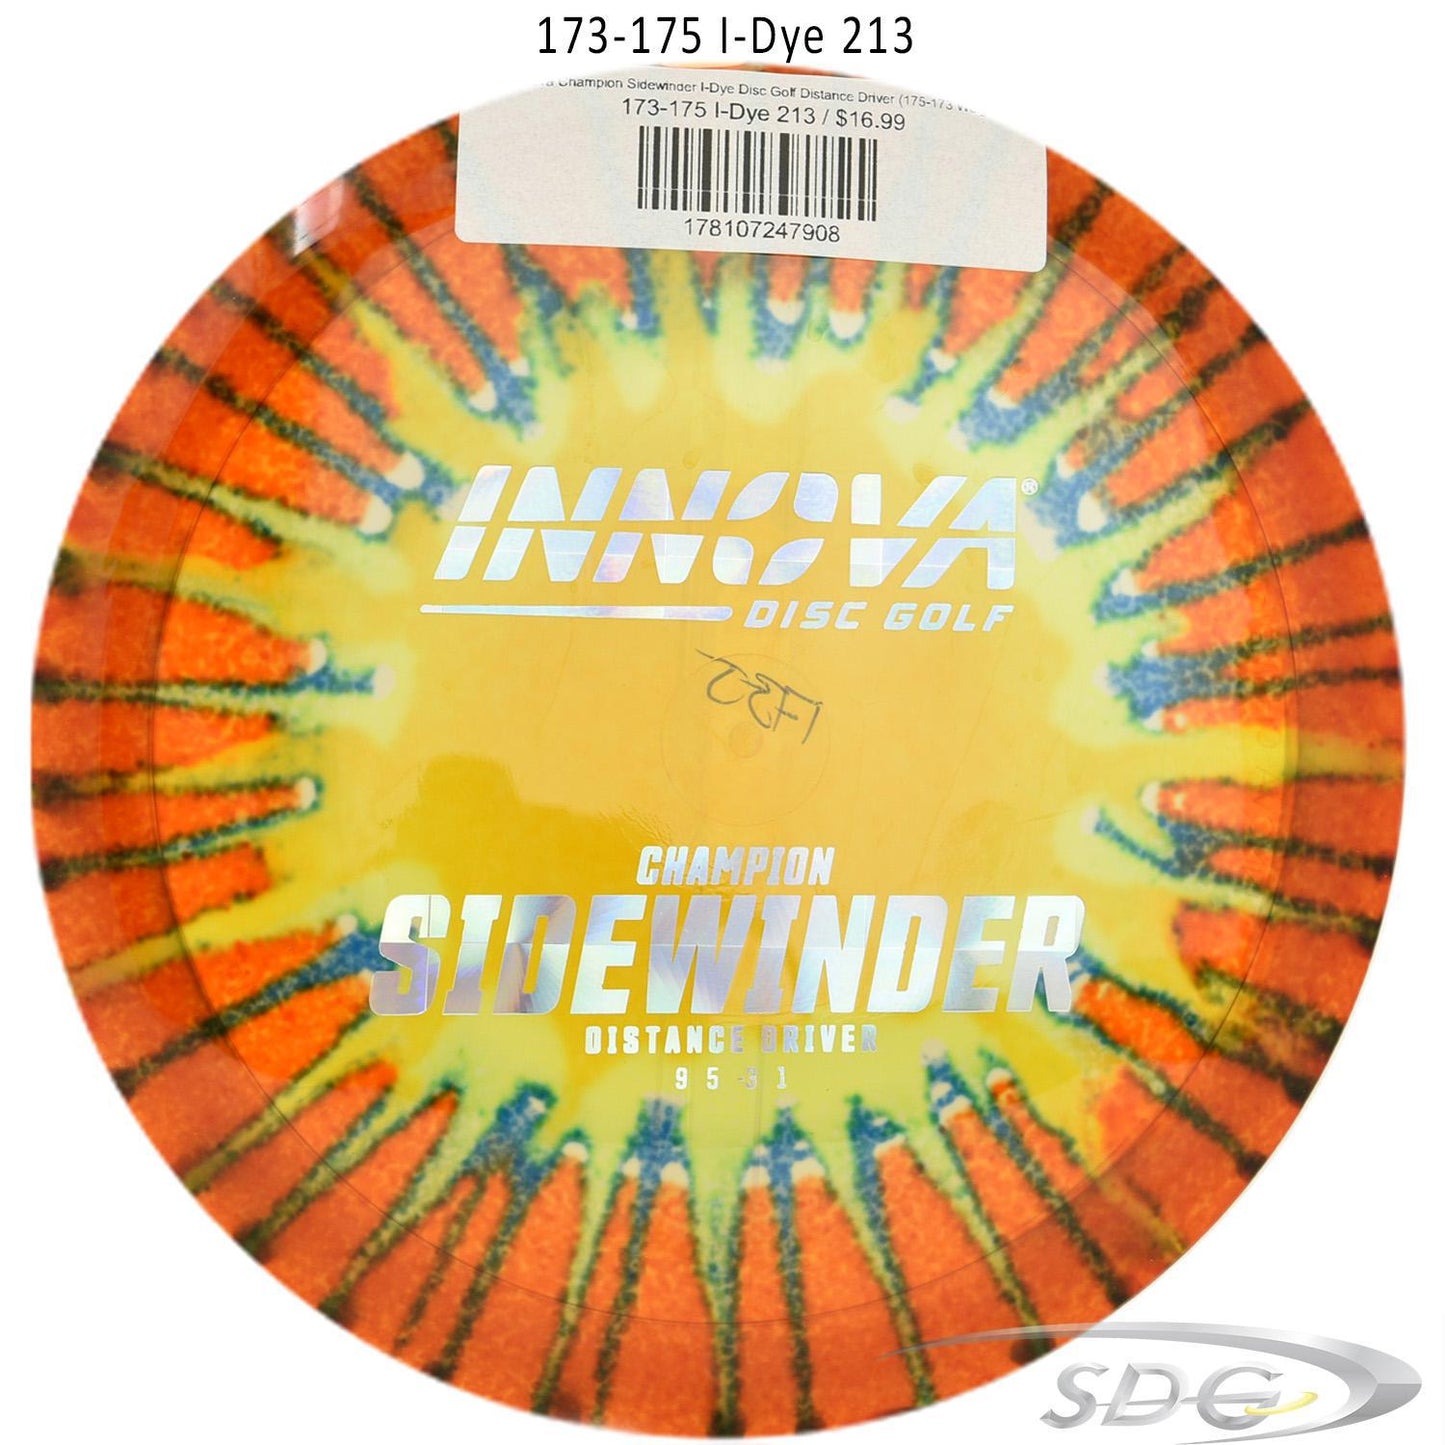 innova-champion-sidewinder-i-dye-disc-golf-distance-driver 173-175 I-Dye 213 